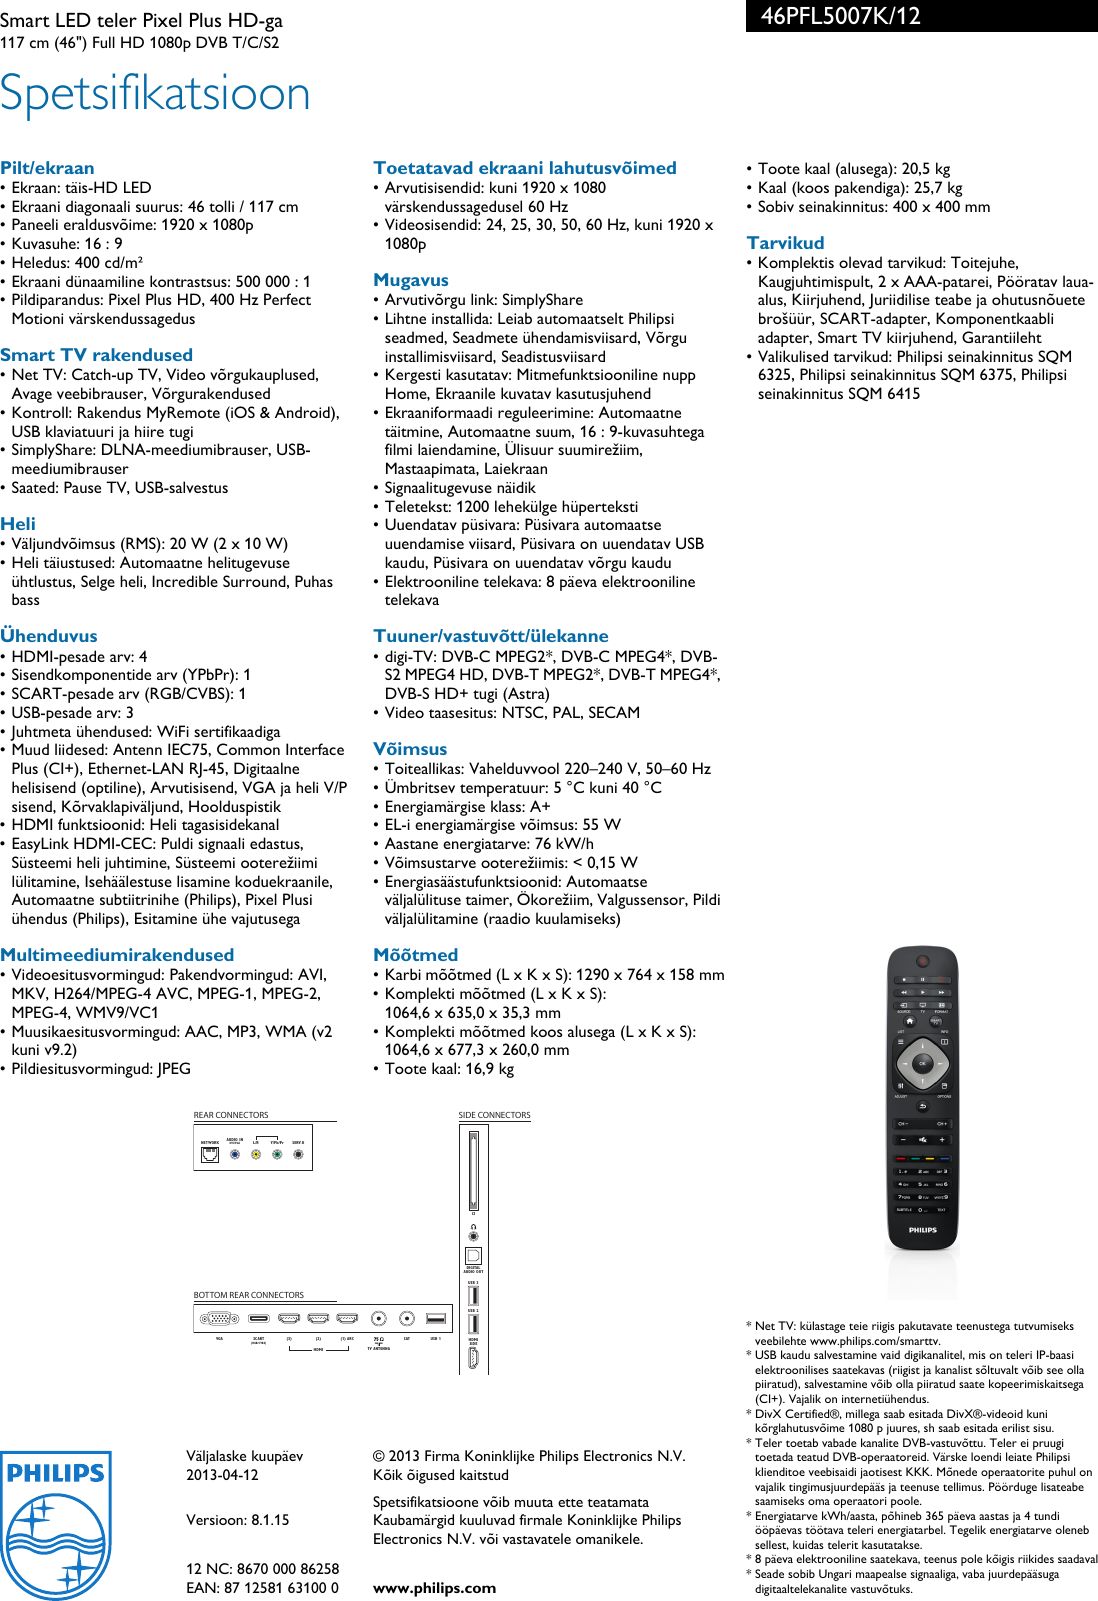 Prompt Say aside Evaluable Philips 46PFL5007K/12 Smart LED Teler Pixel Plus HD ga User Manual Voldik  46pfl5007k 12 Pss Estee